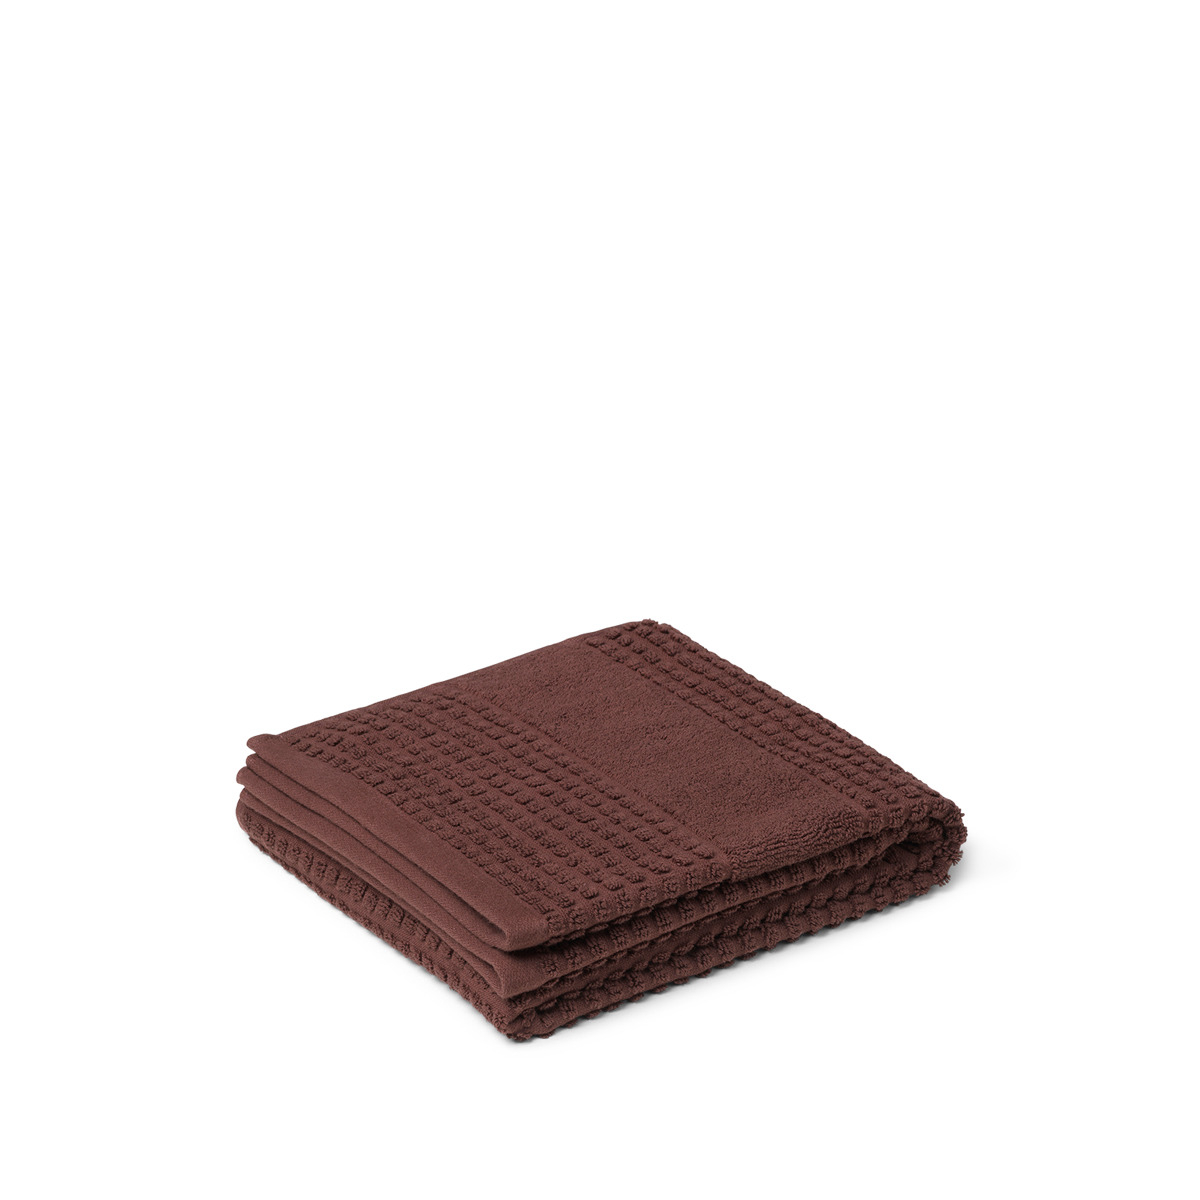 4: Juna - Check Håndklæde chokolade 50x100 cm